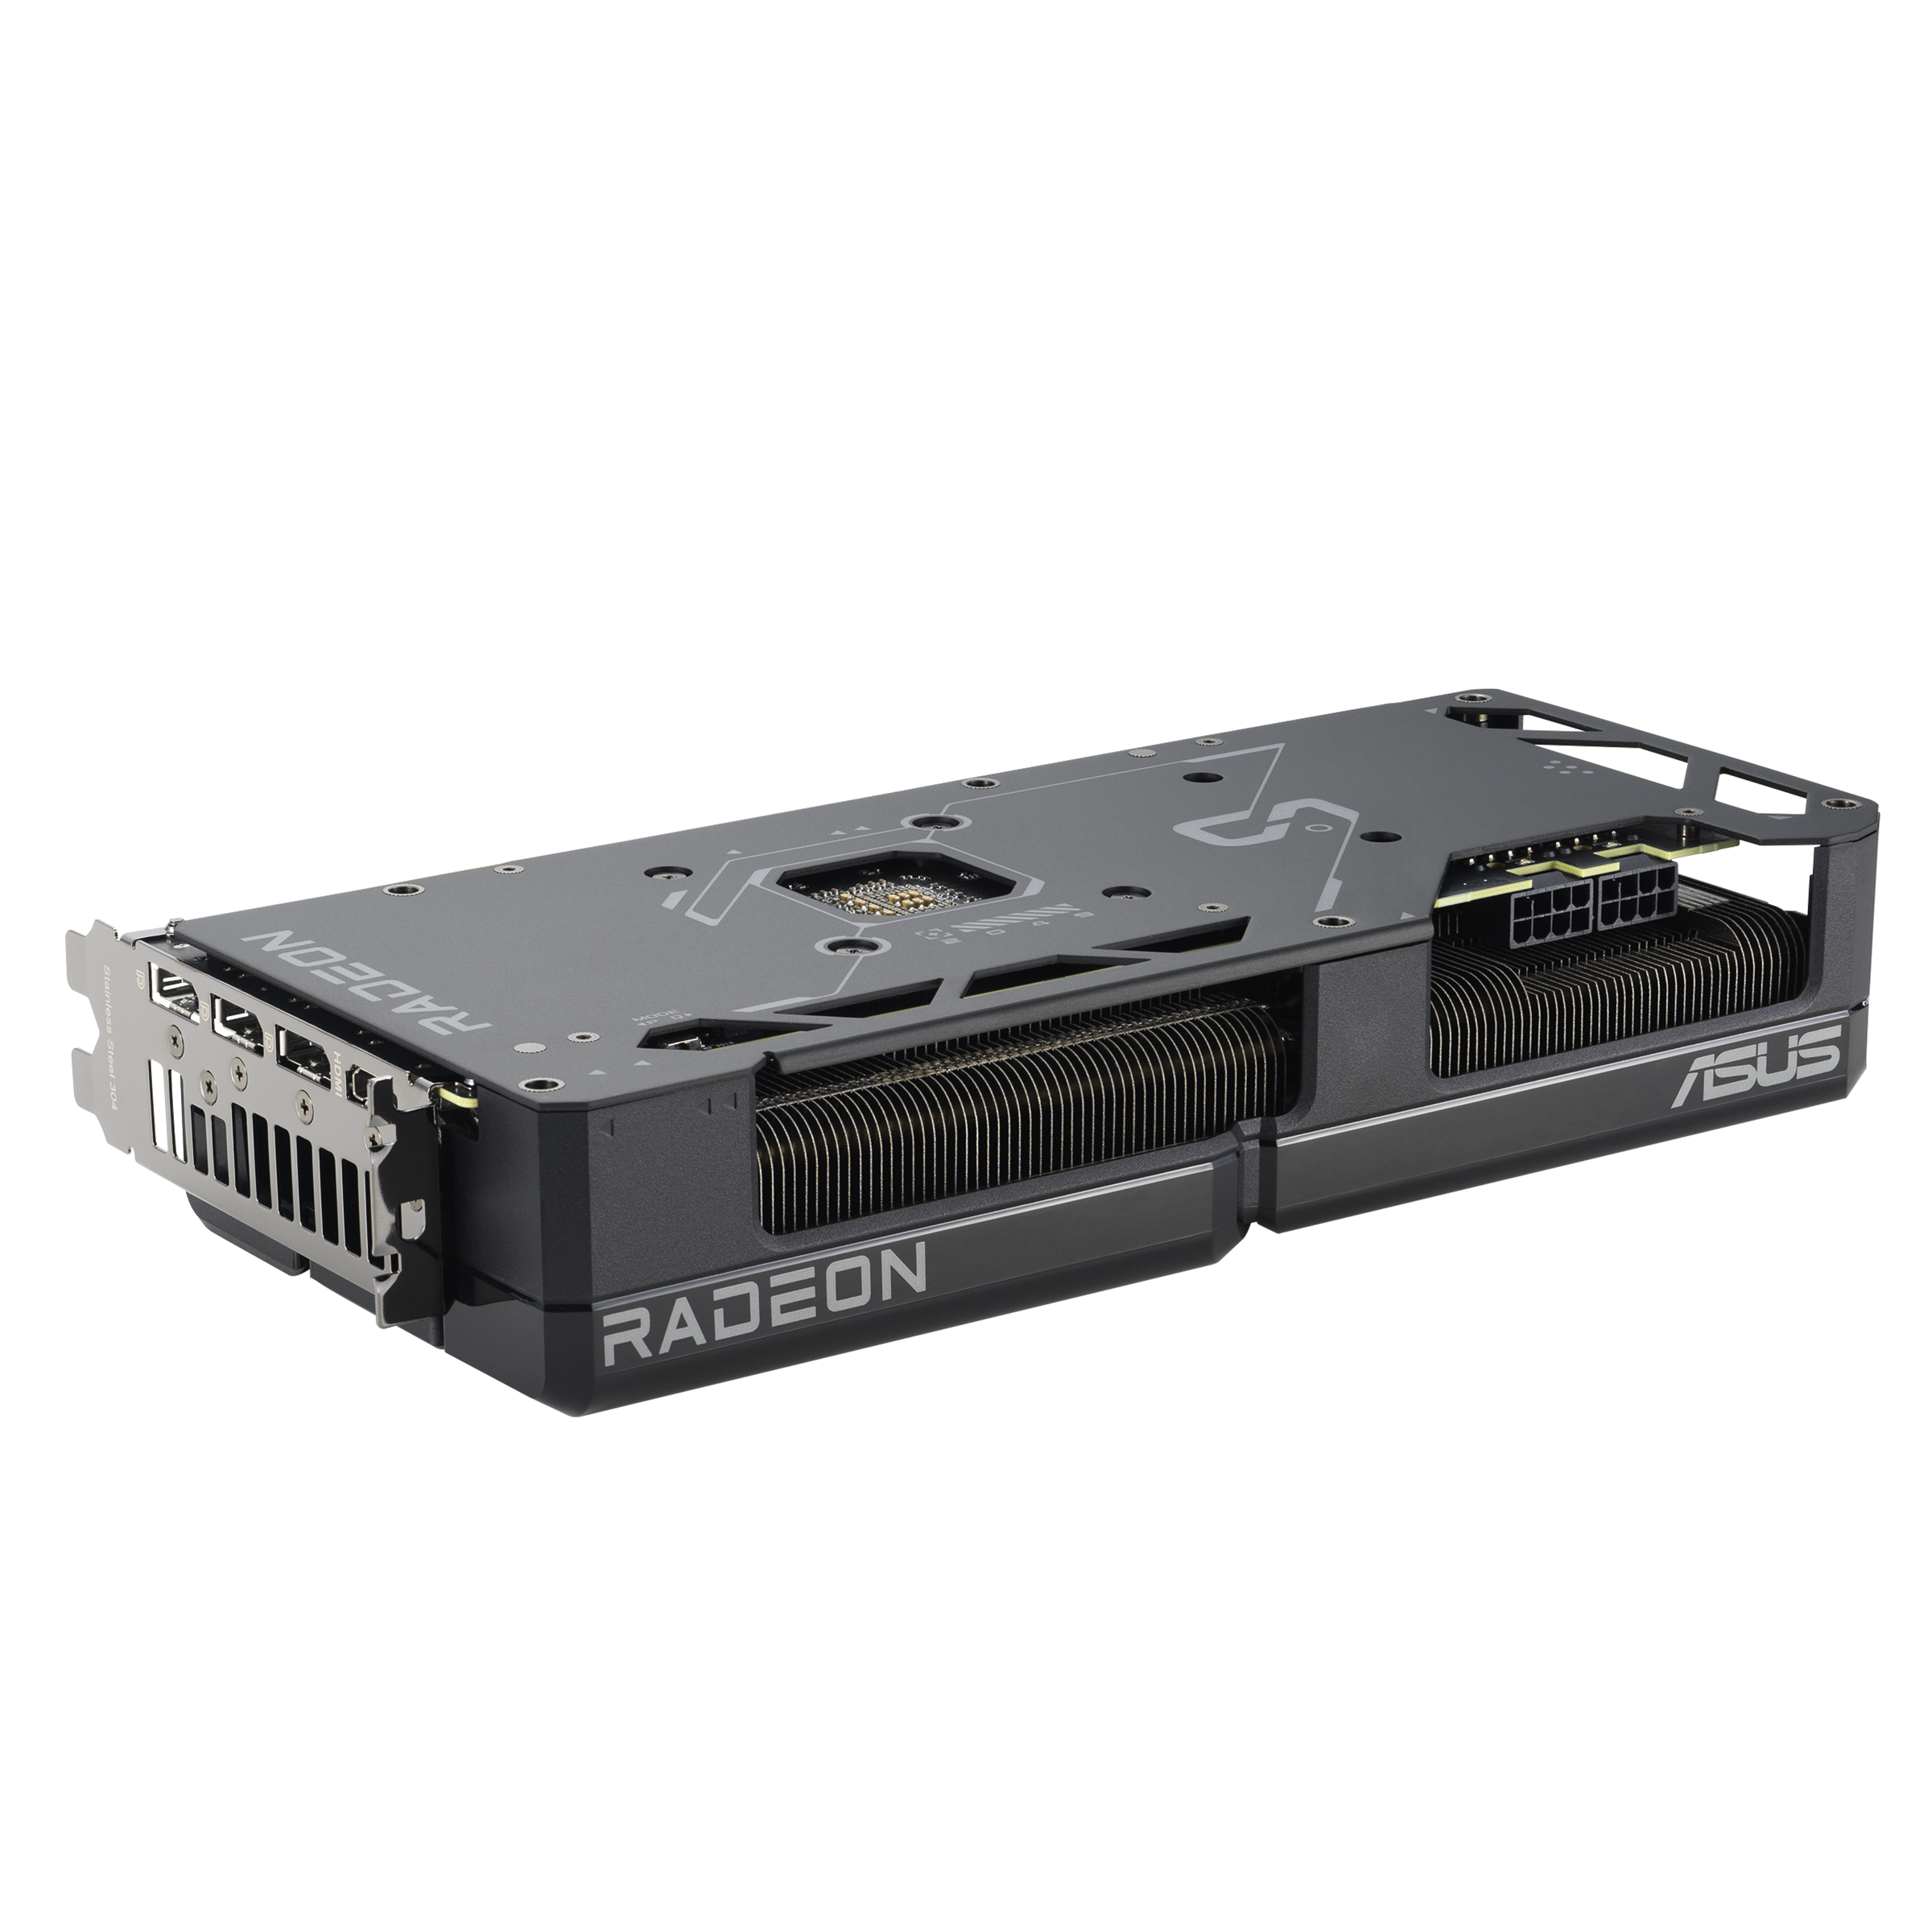 ASUS Dual Radeon™ RX 7700 XT OC Edition 12GB GDDR6